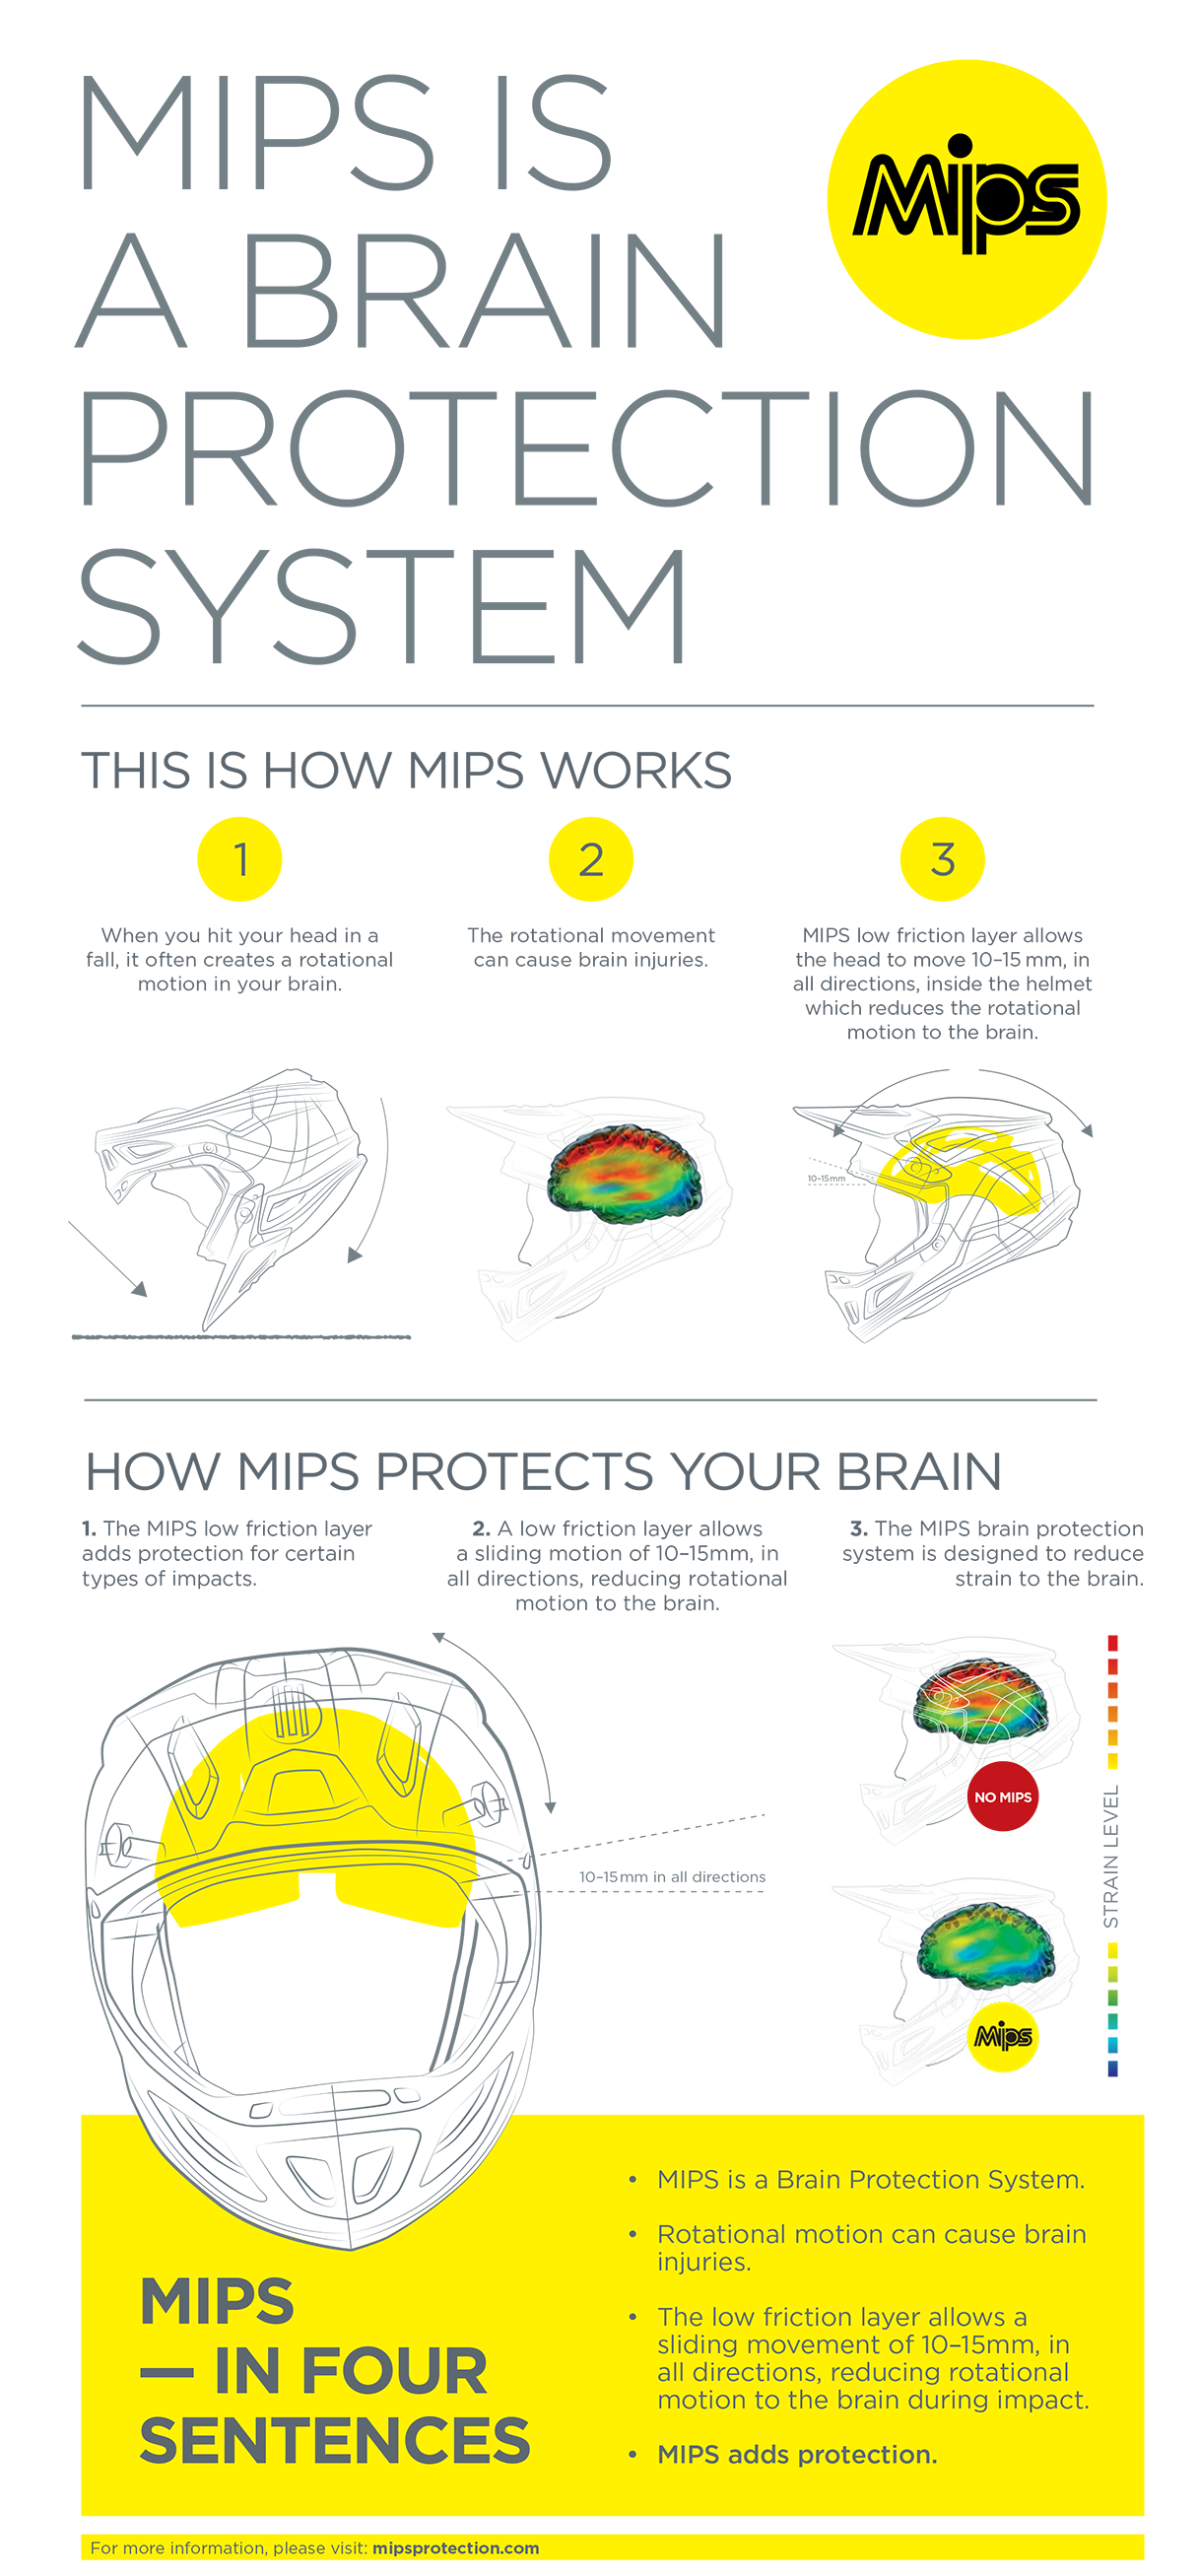 ALPINESTARS Supertech M10 Helmet - Meta 2 - MIPS® - Black/Yellow/Orange - Small 8300422-1549-SM